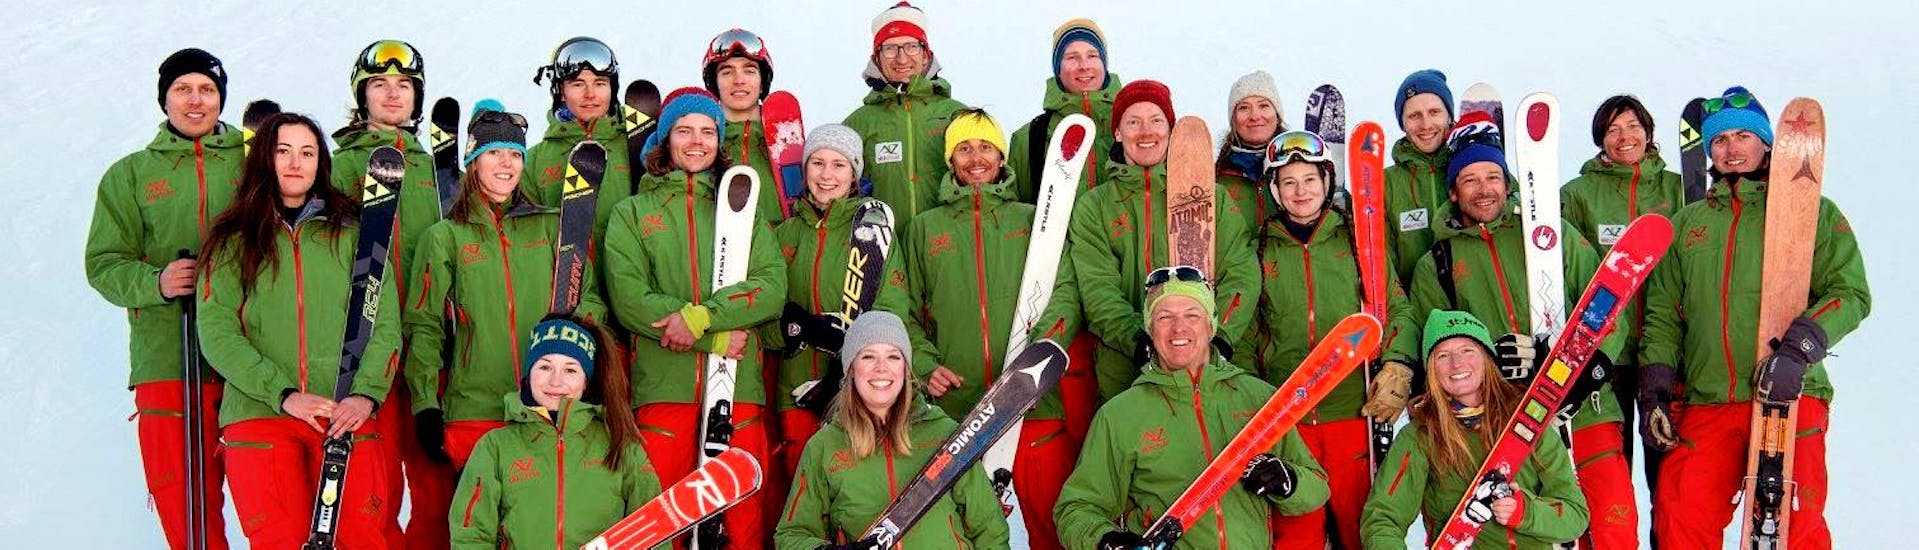 Group of ski instructors of Skischule A-Z